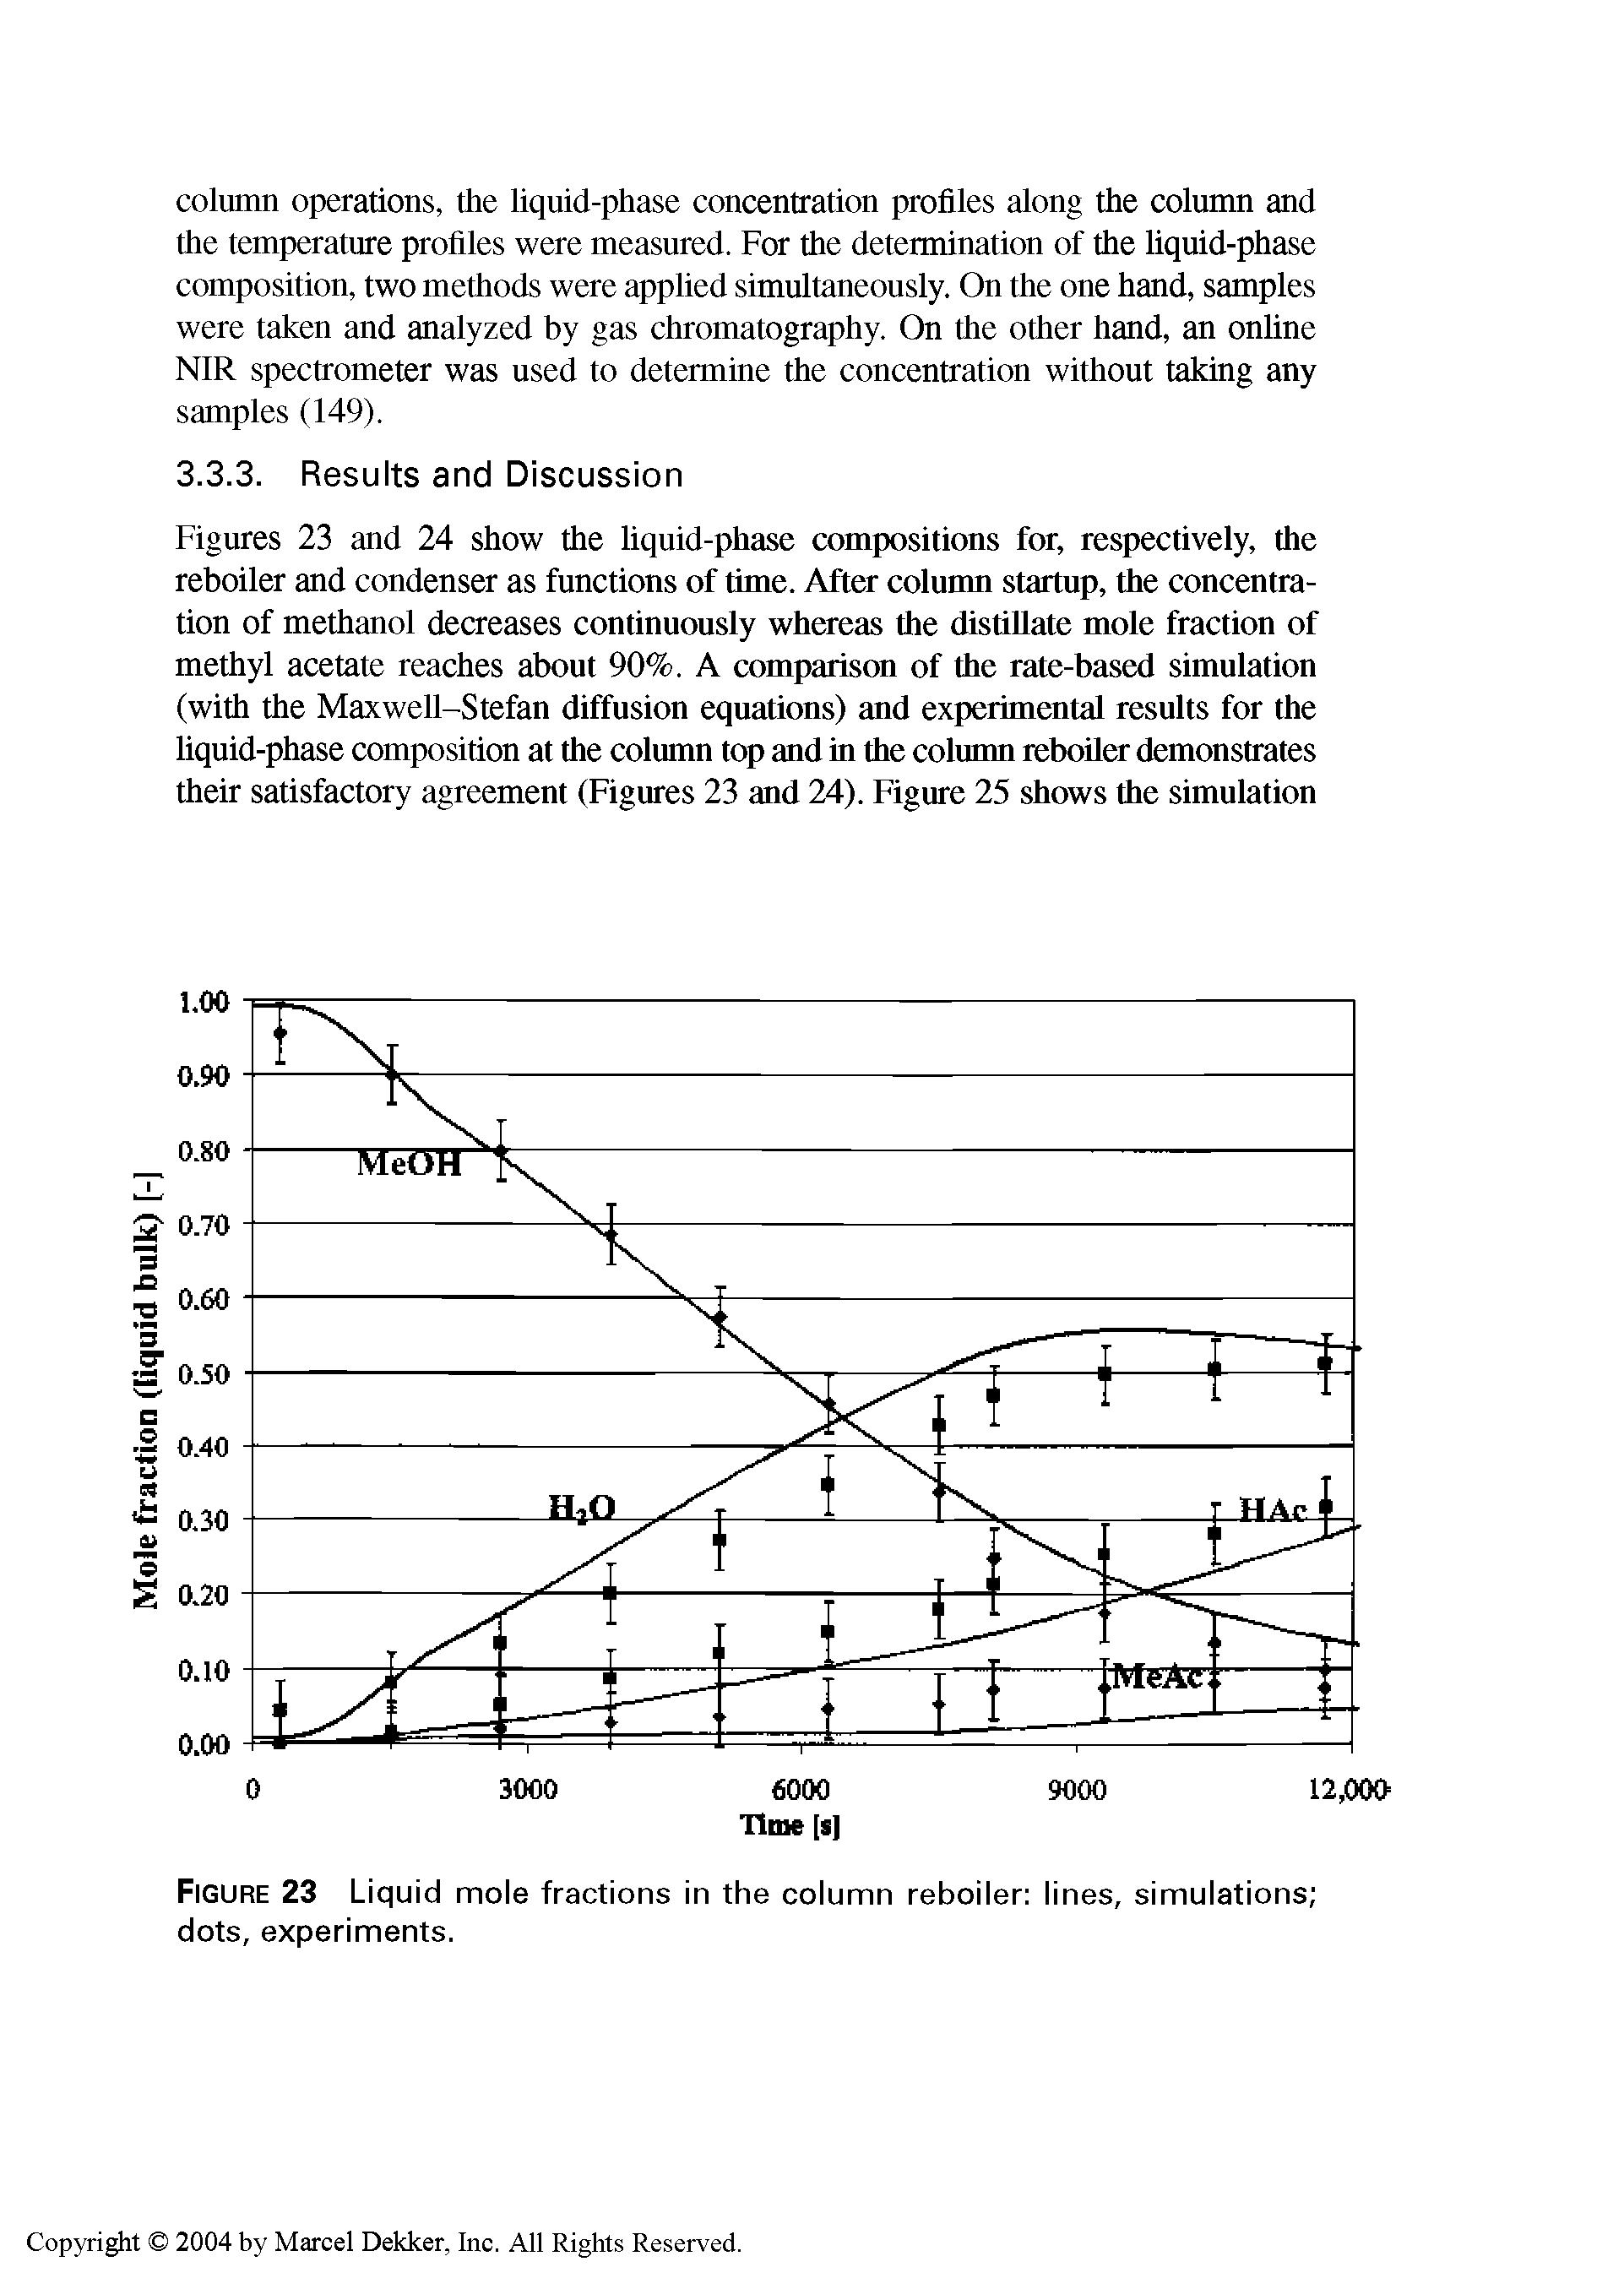 Figure 23 Liquid mole fractions in the column reboiler lines, simulations dots, experiments.